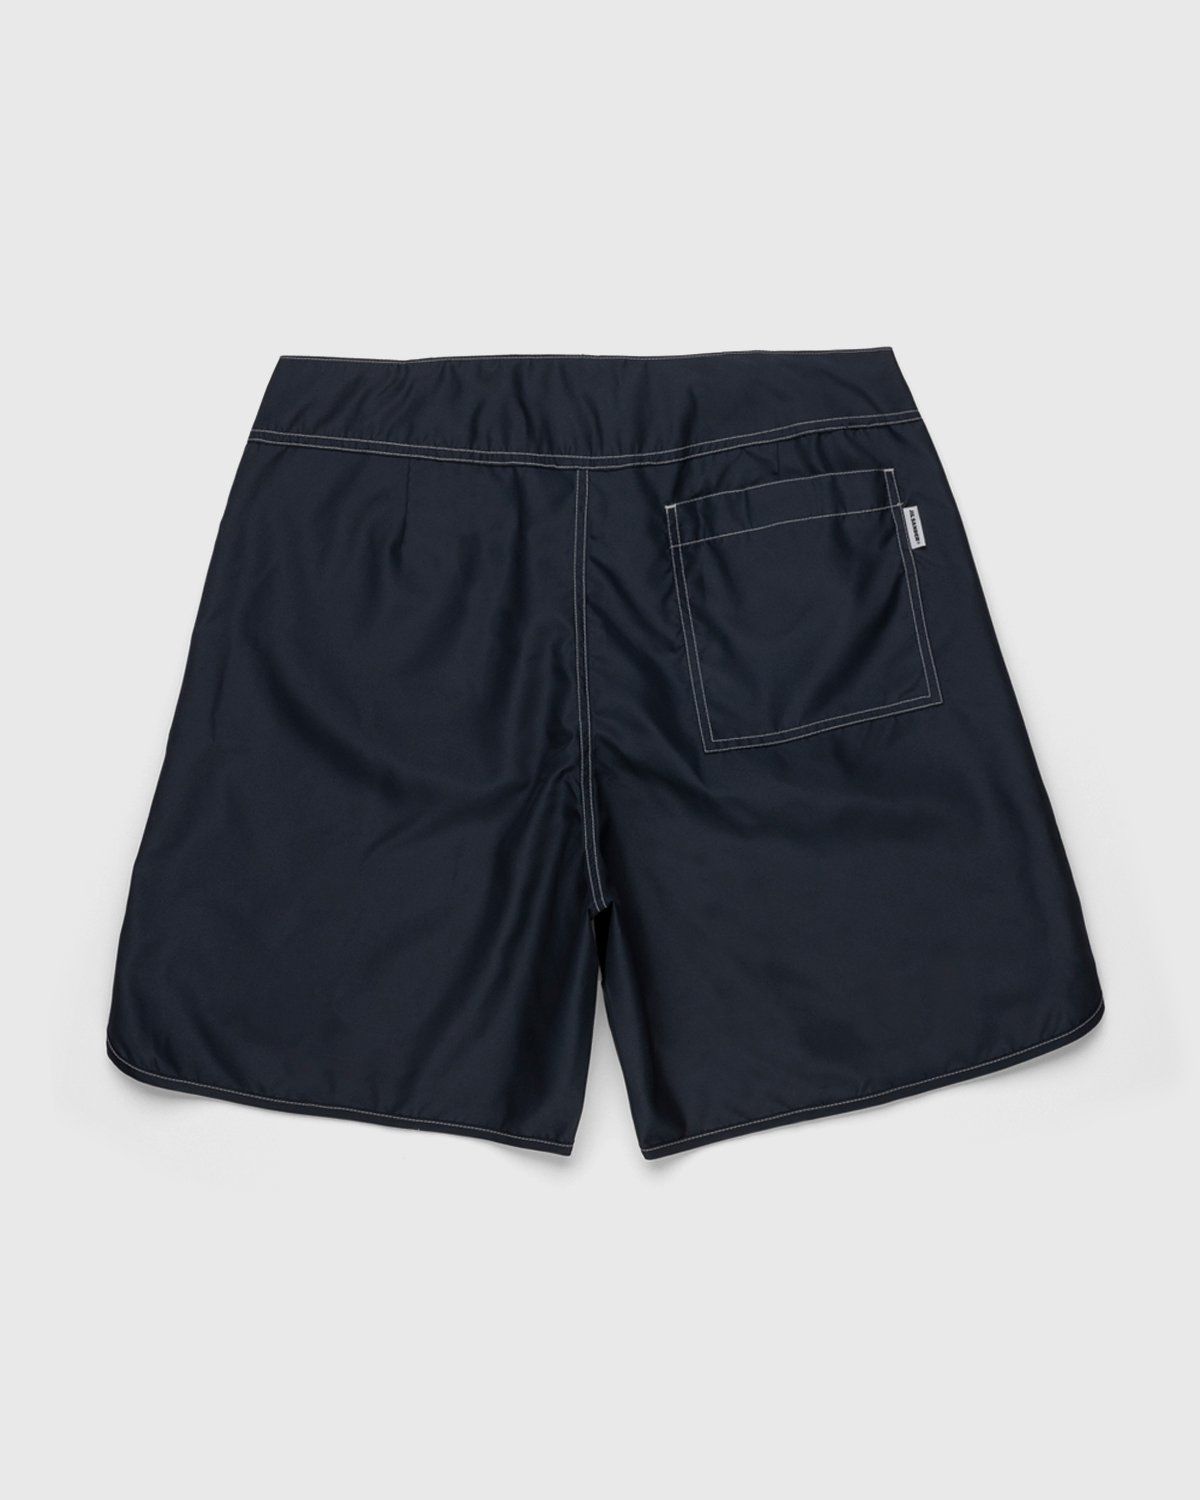 Jil Sander – Nylon Swim Shorts Black - Swim Shorts - Black - Image 2